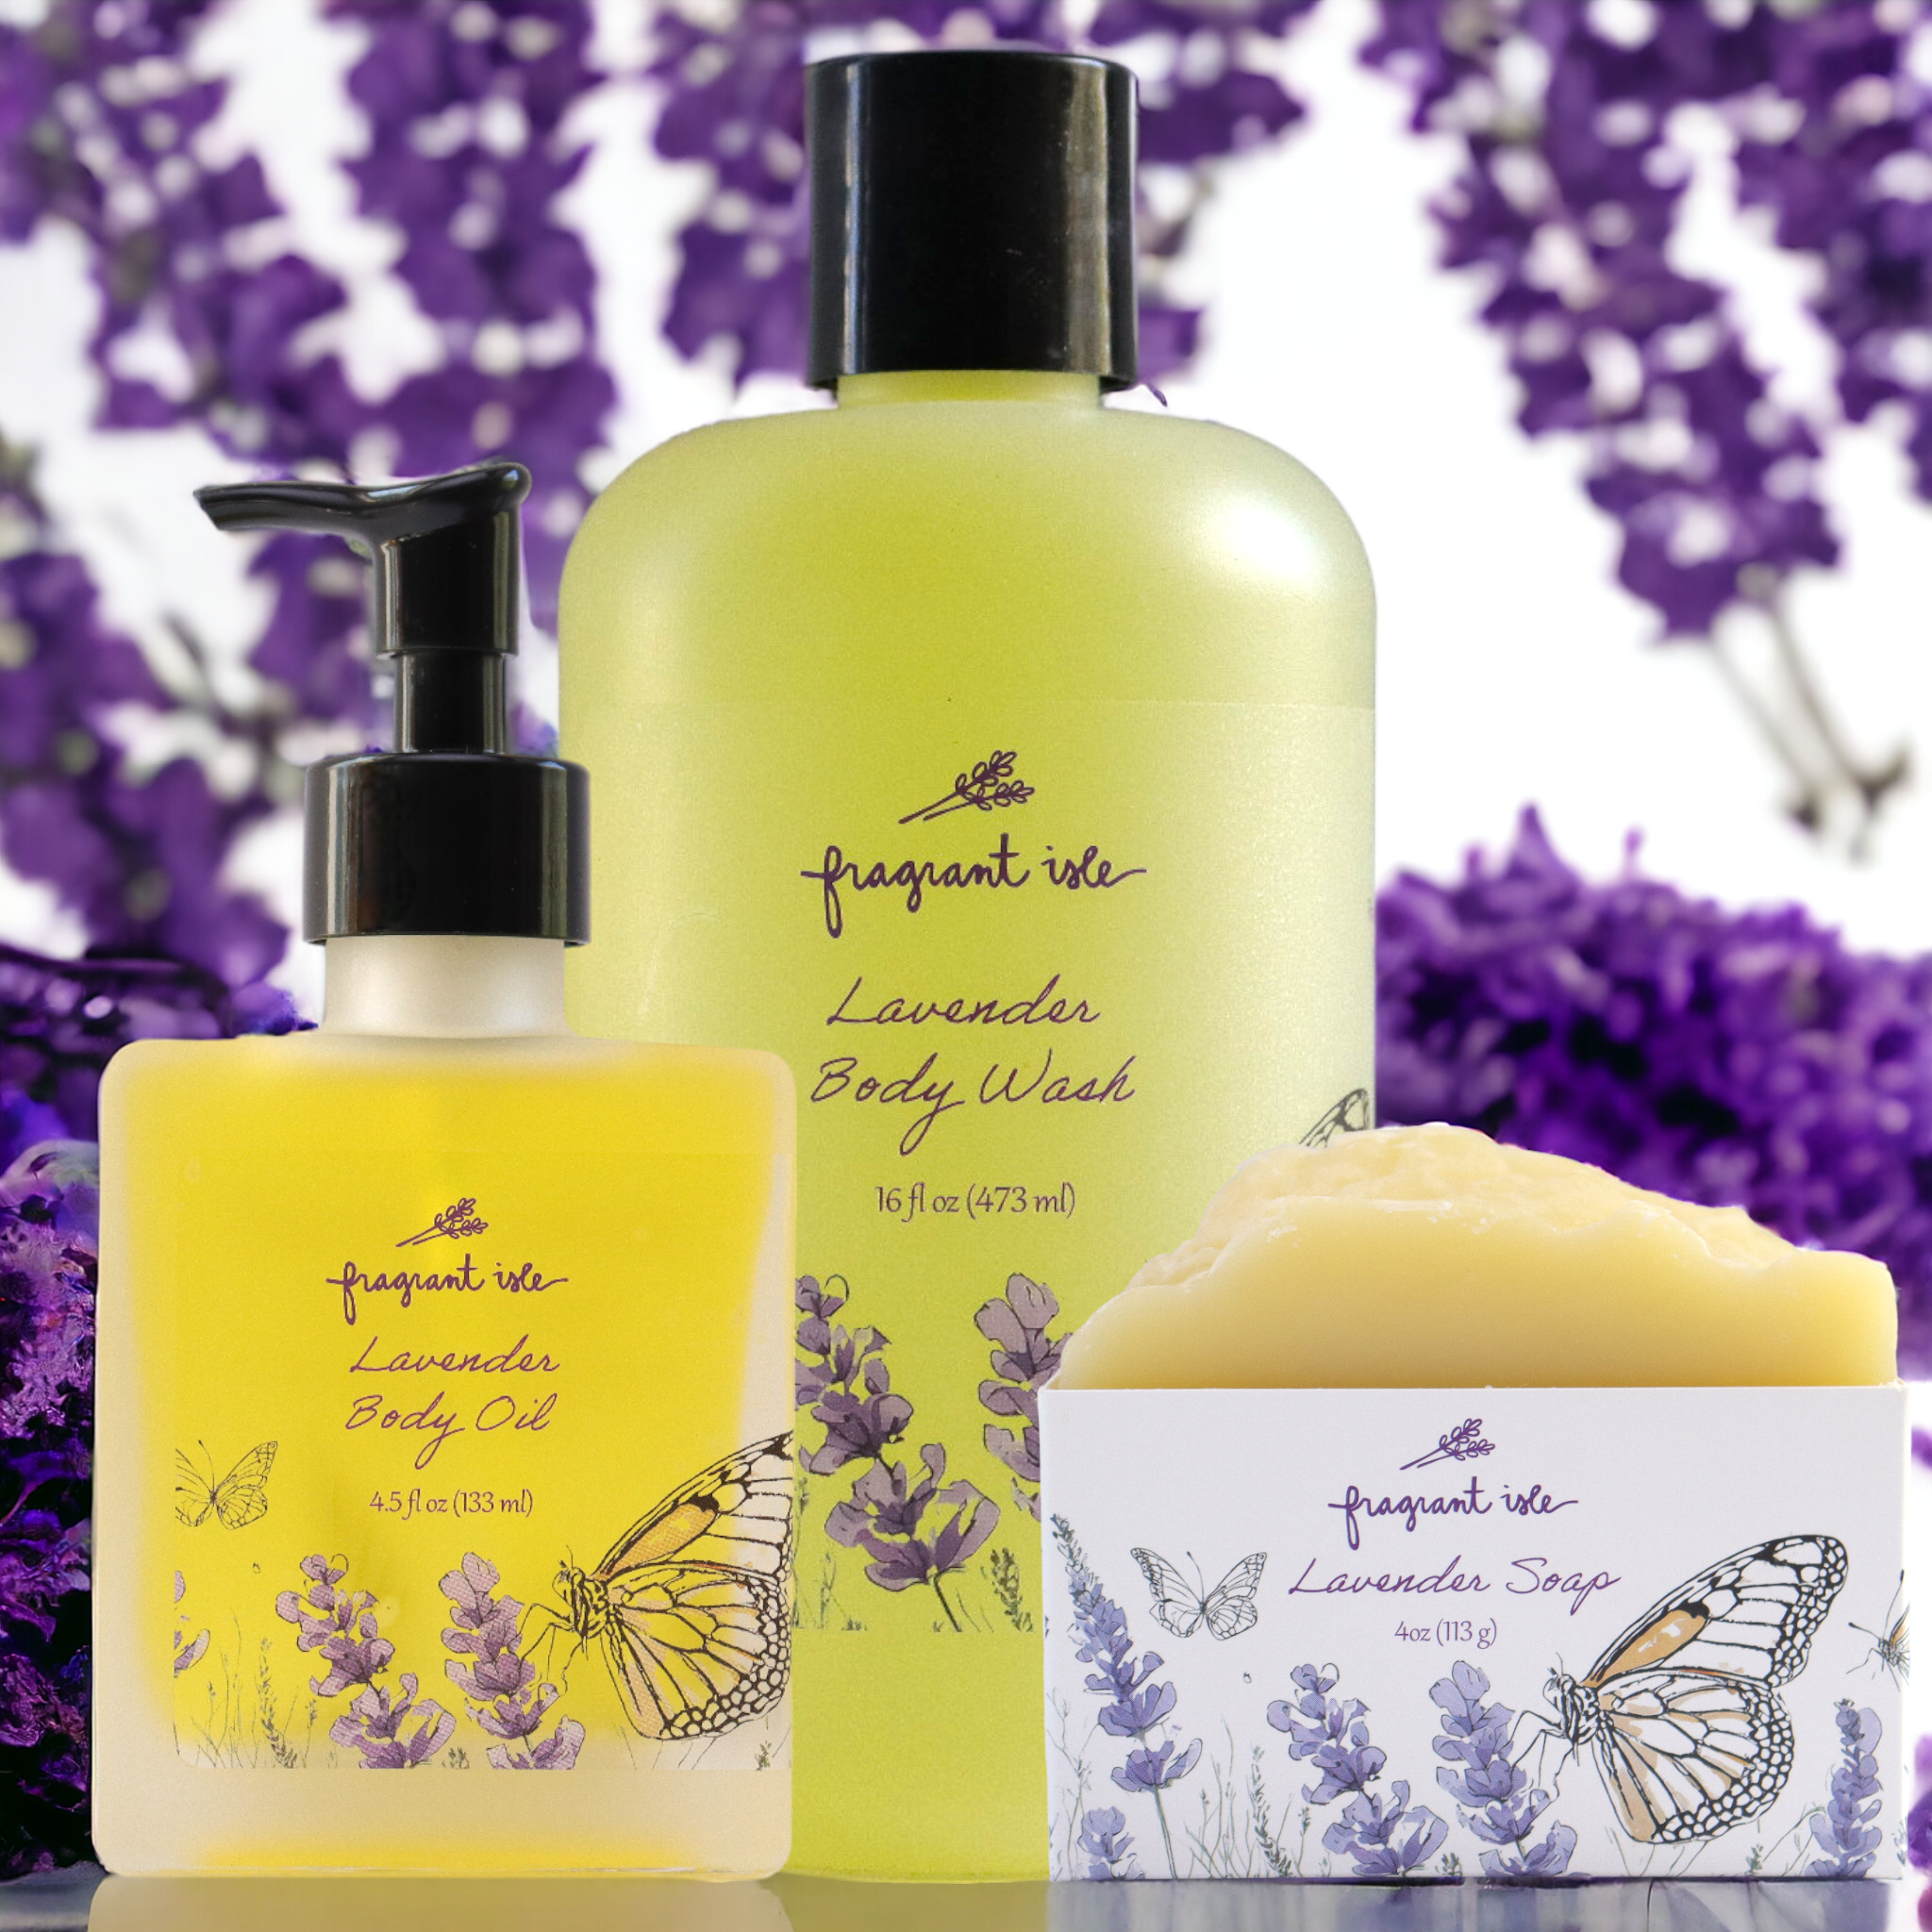 Lavender Body Wash - 16 oz